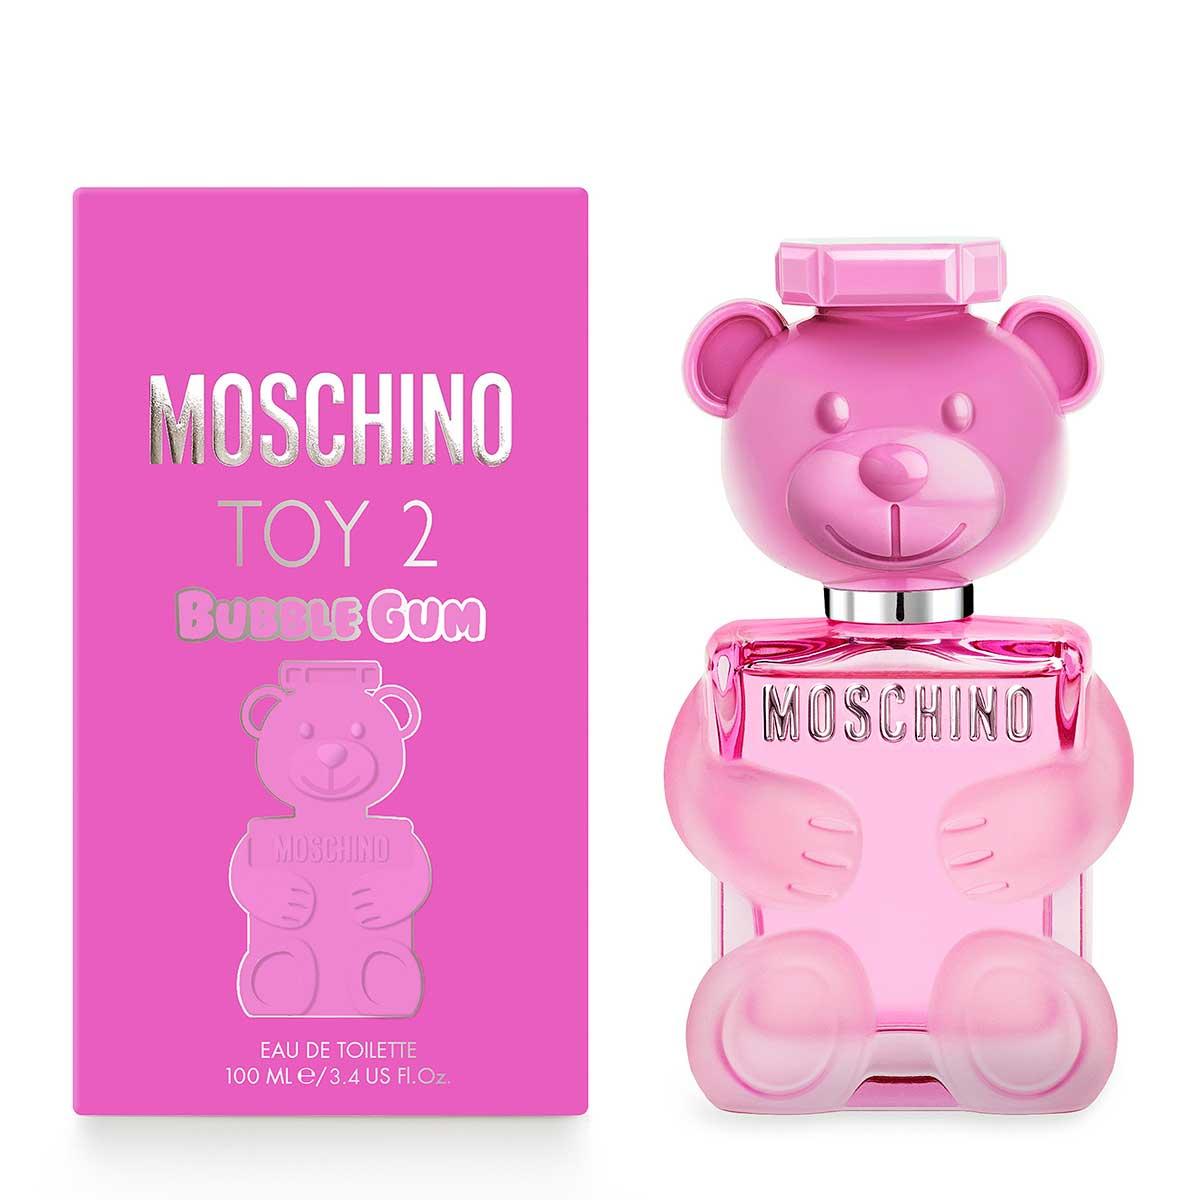 Moschino Toy 2 Bubblegum Eau de Toilette 100ml | FEELUNIQUE